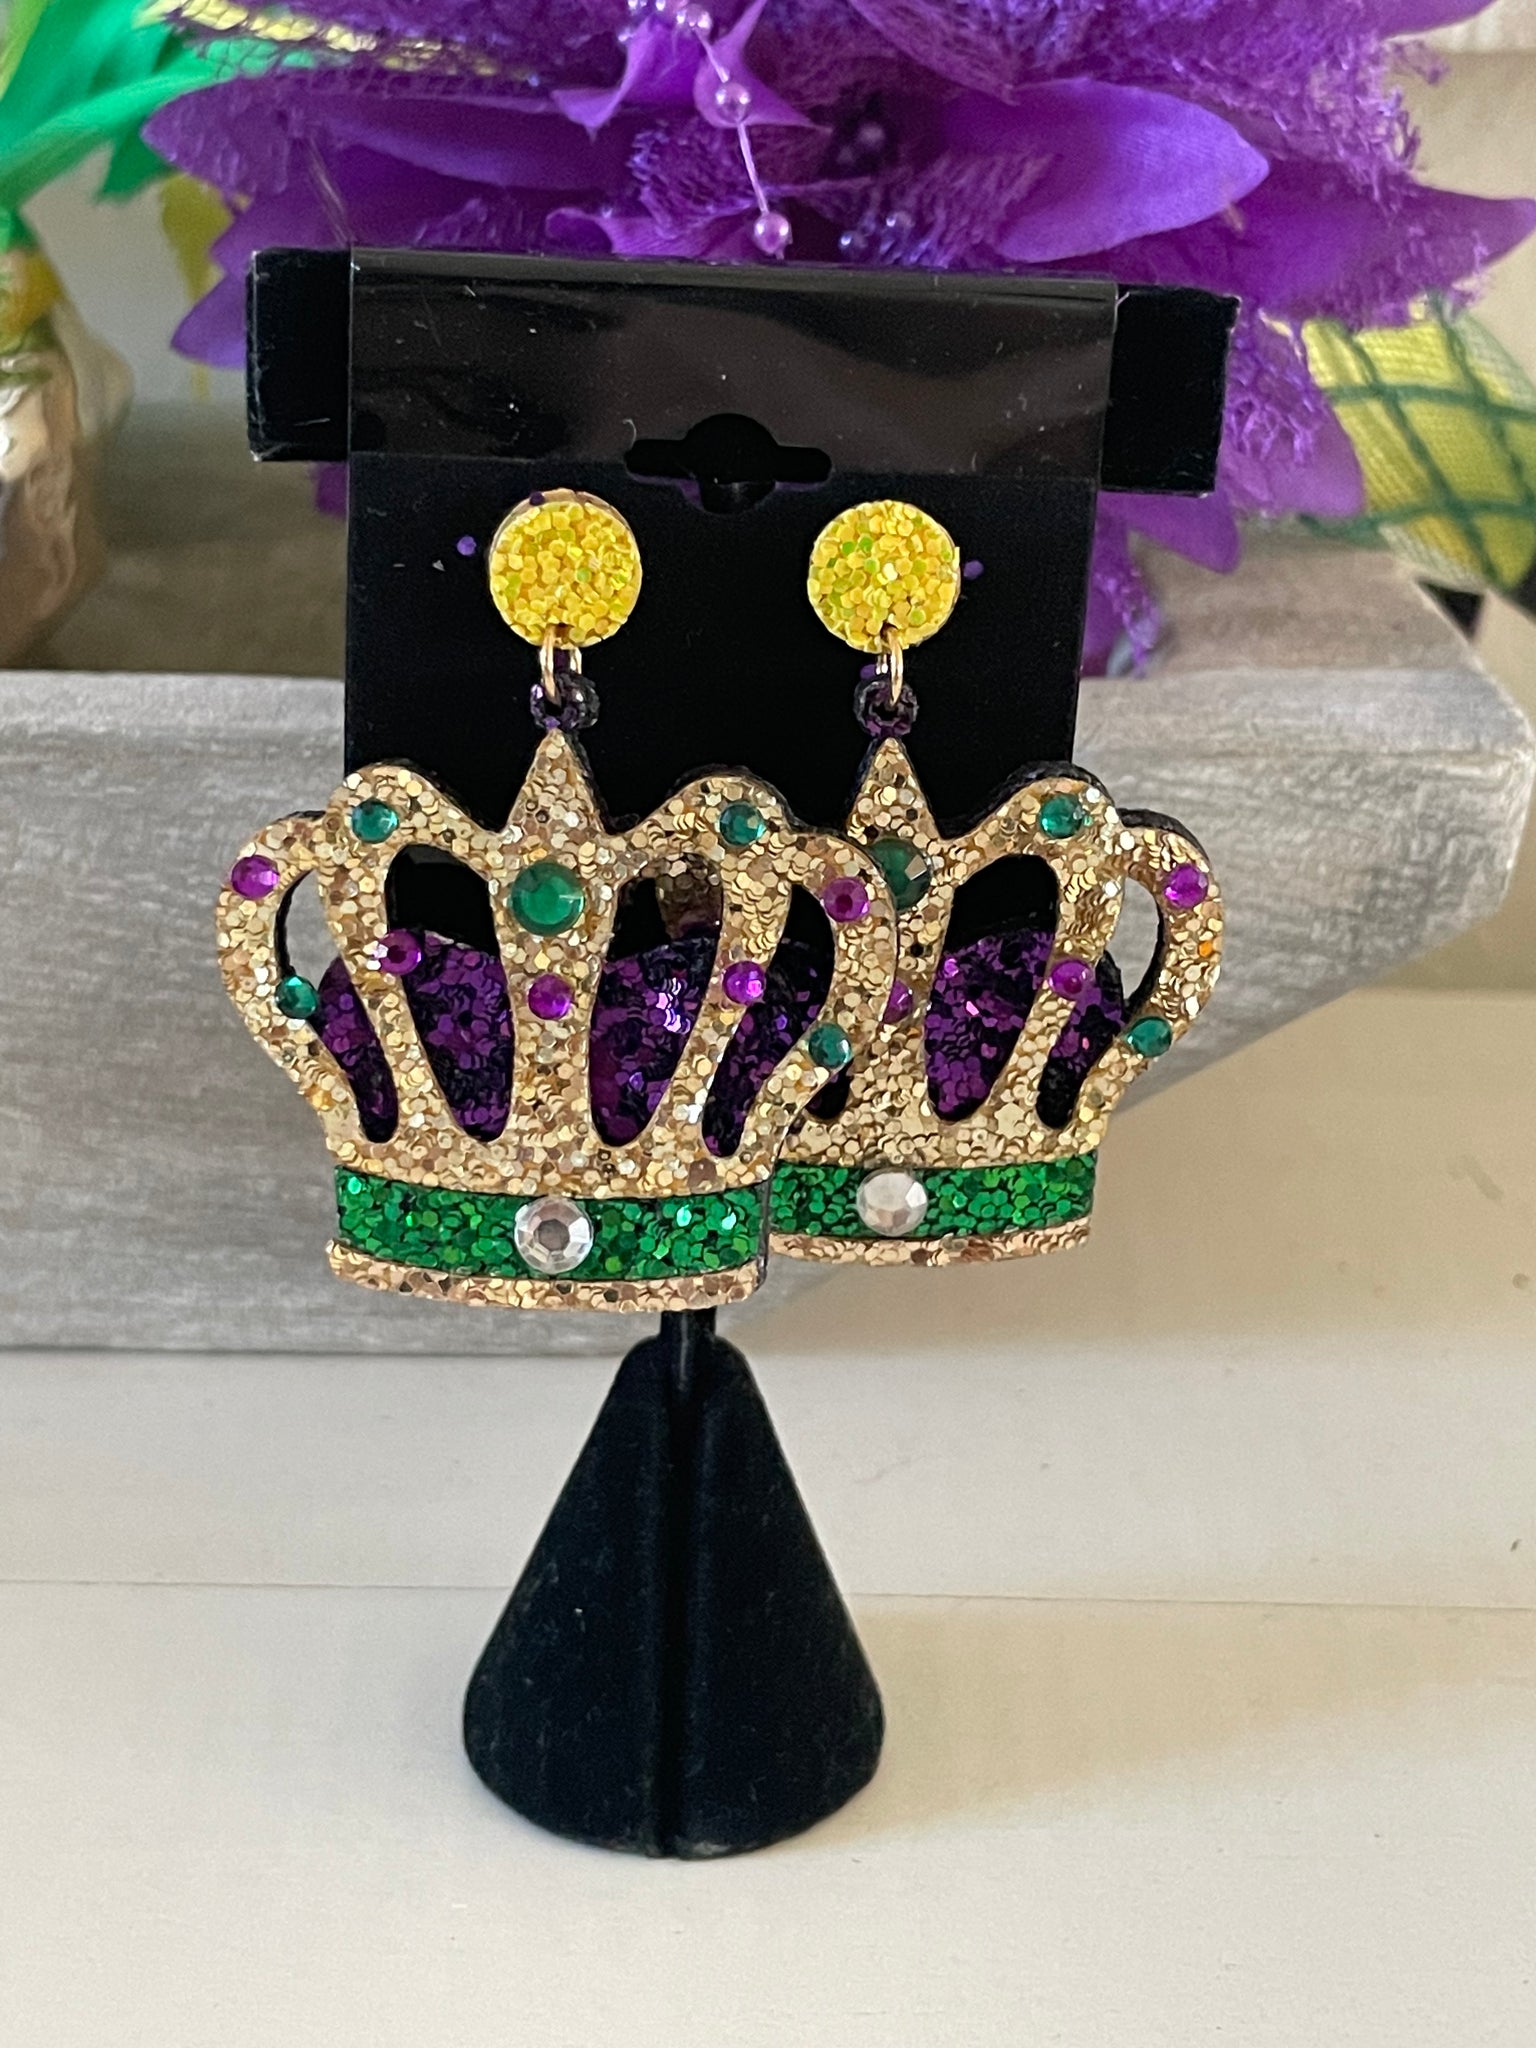 Mardi Gras crown earrings